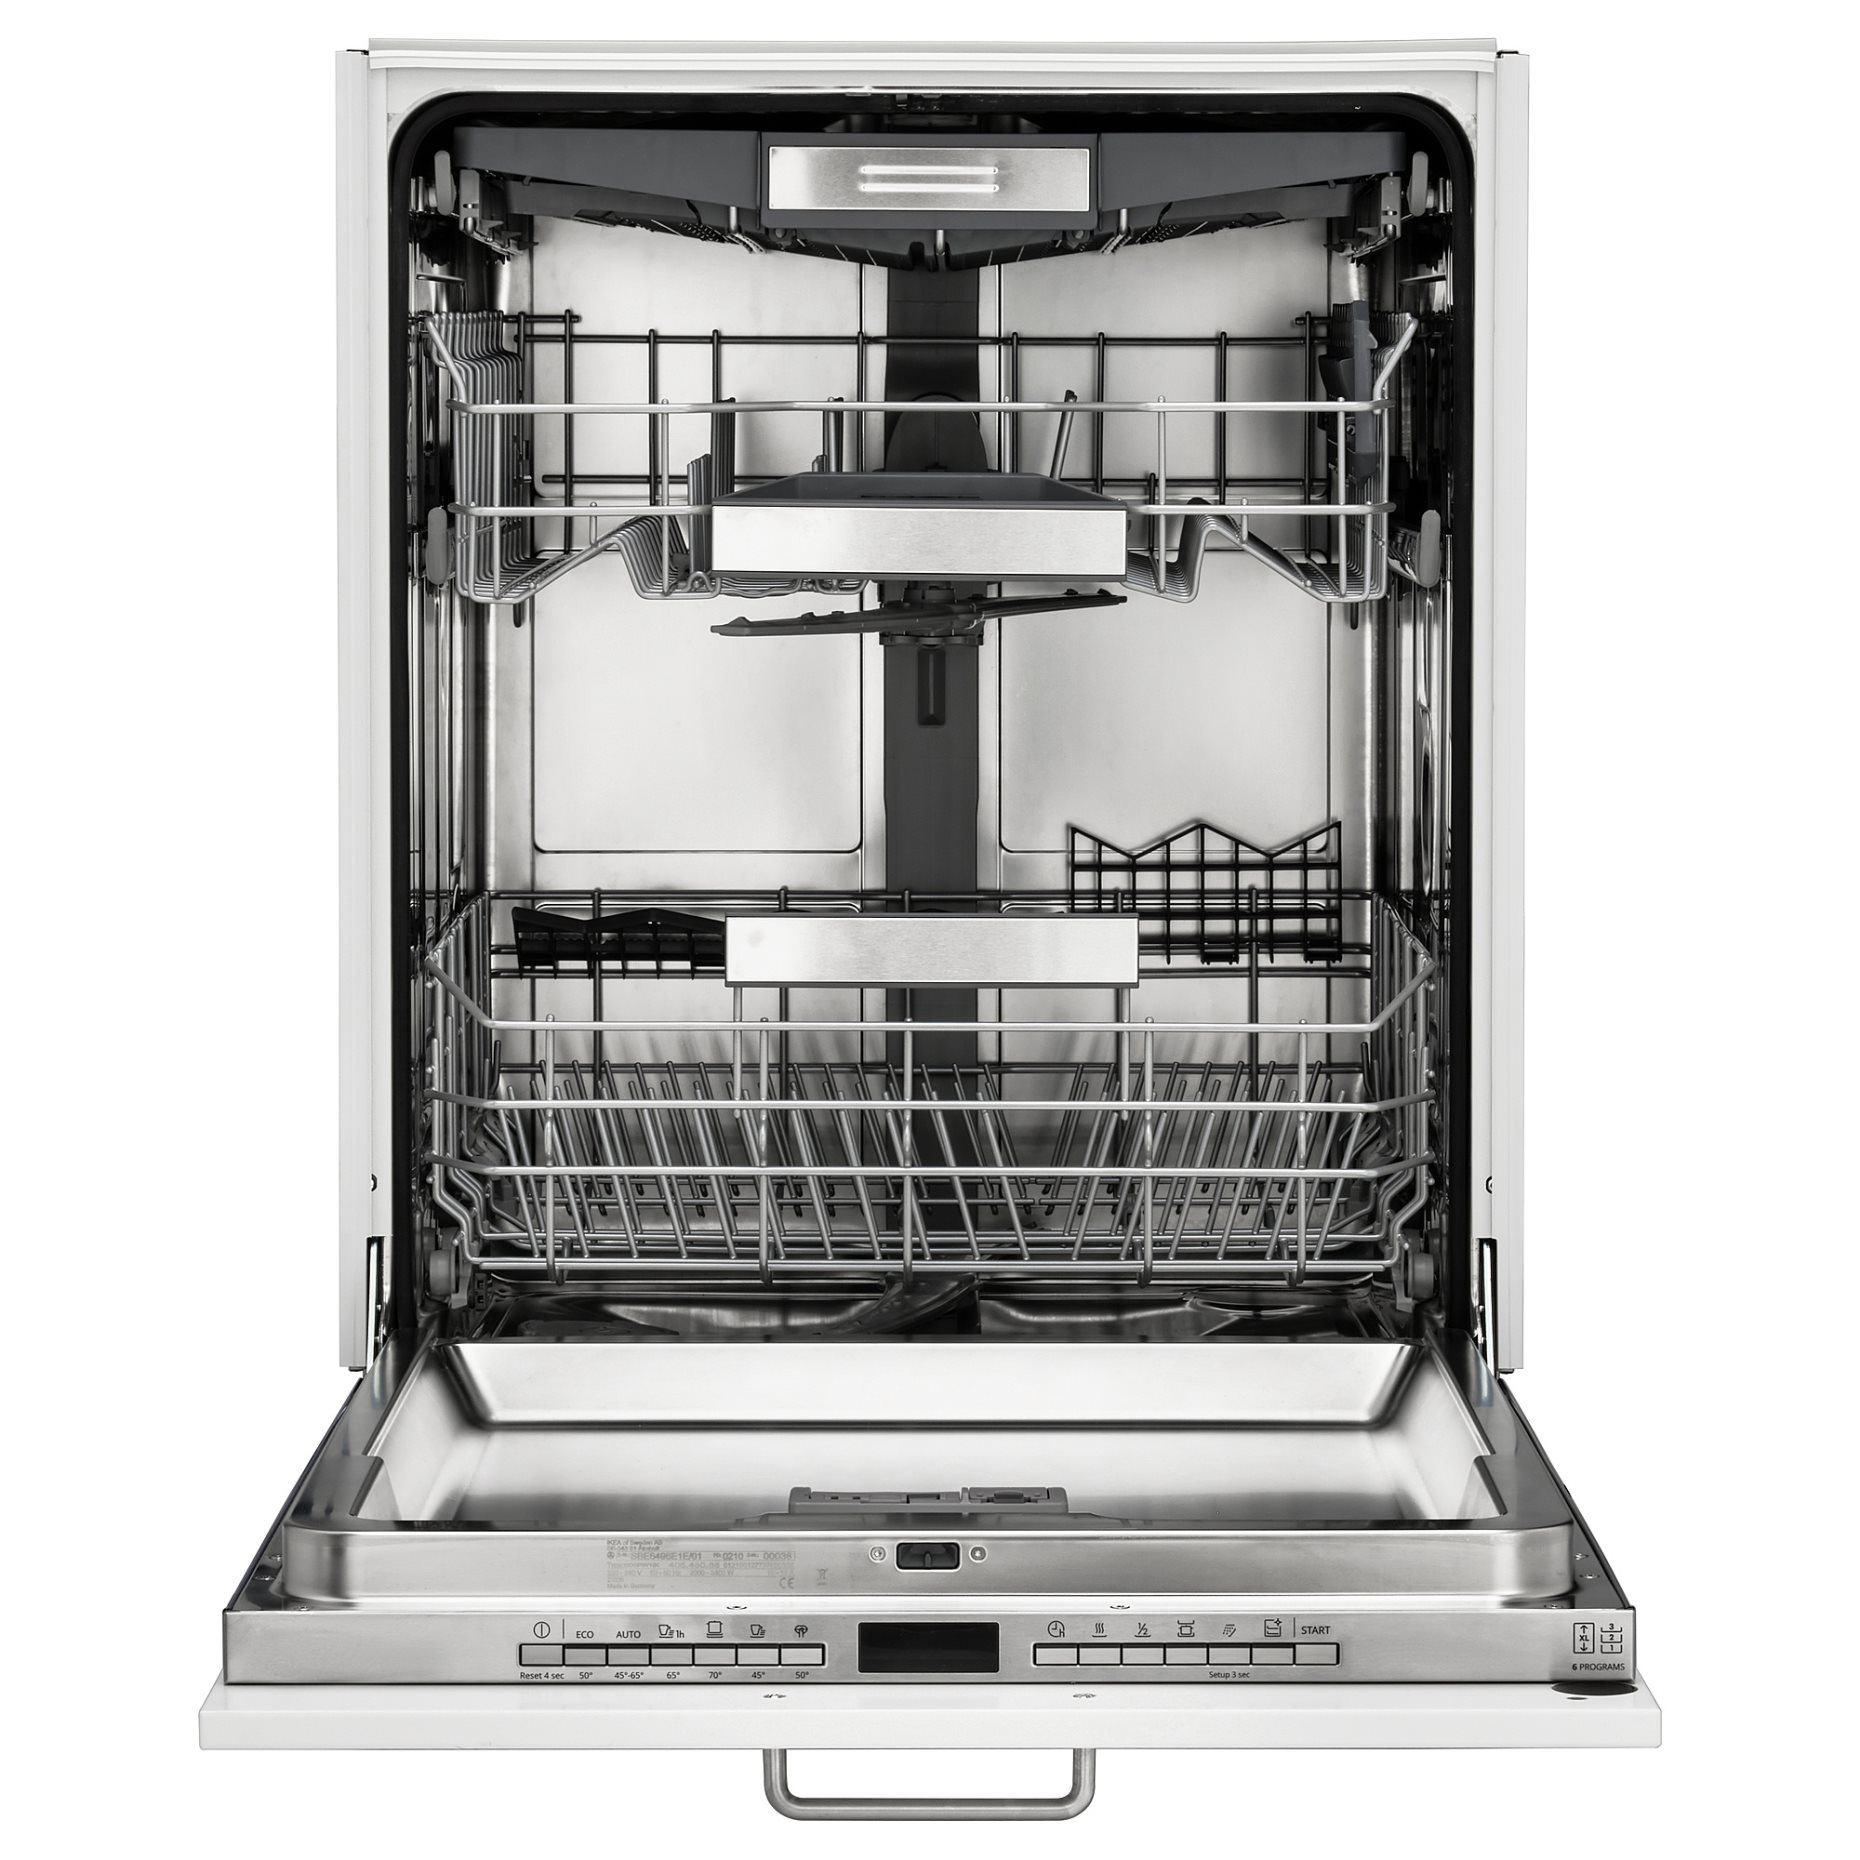 TORSBODA, integrated dishwasher/IKEA 700, 60 cm, 405.480.88